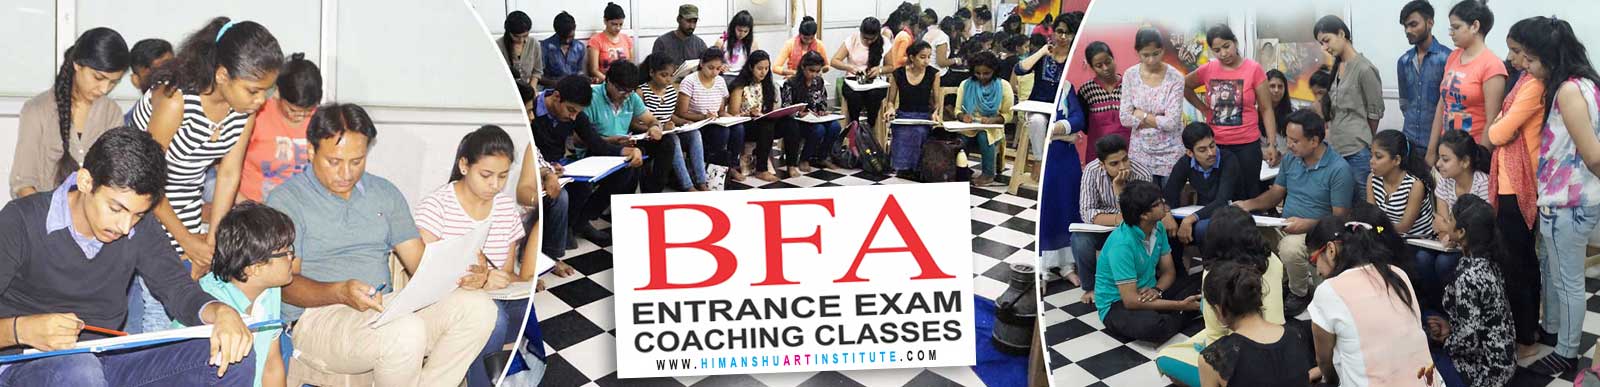 Online BFA Entrance Exam Coaching Classes